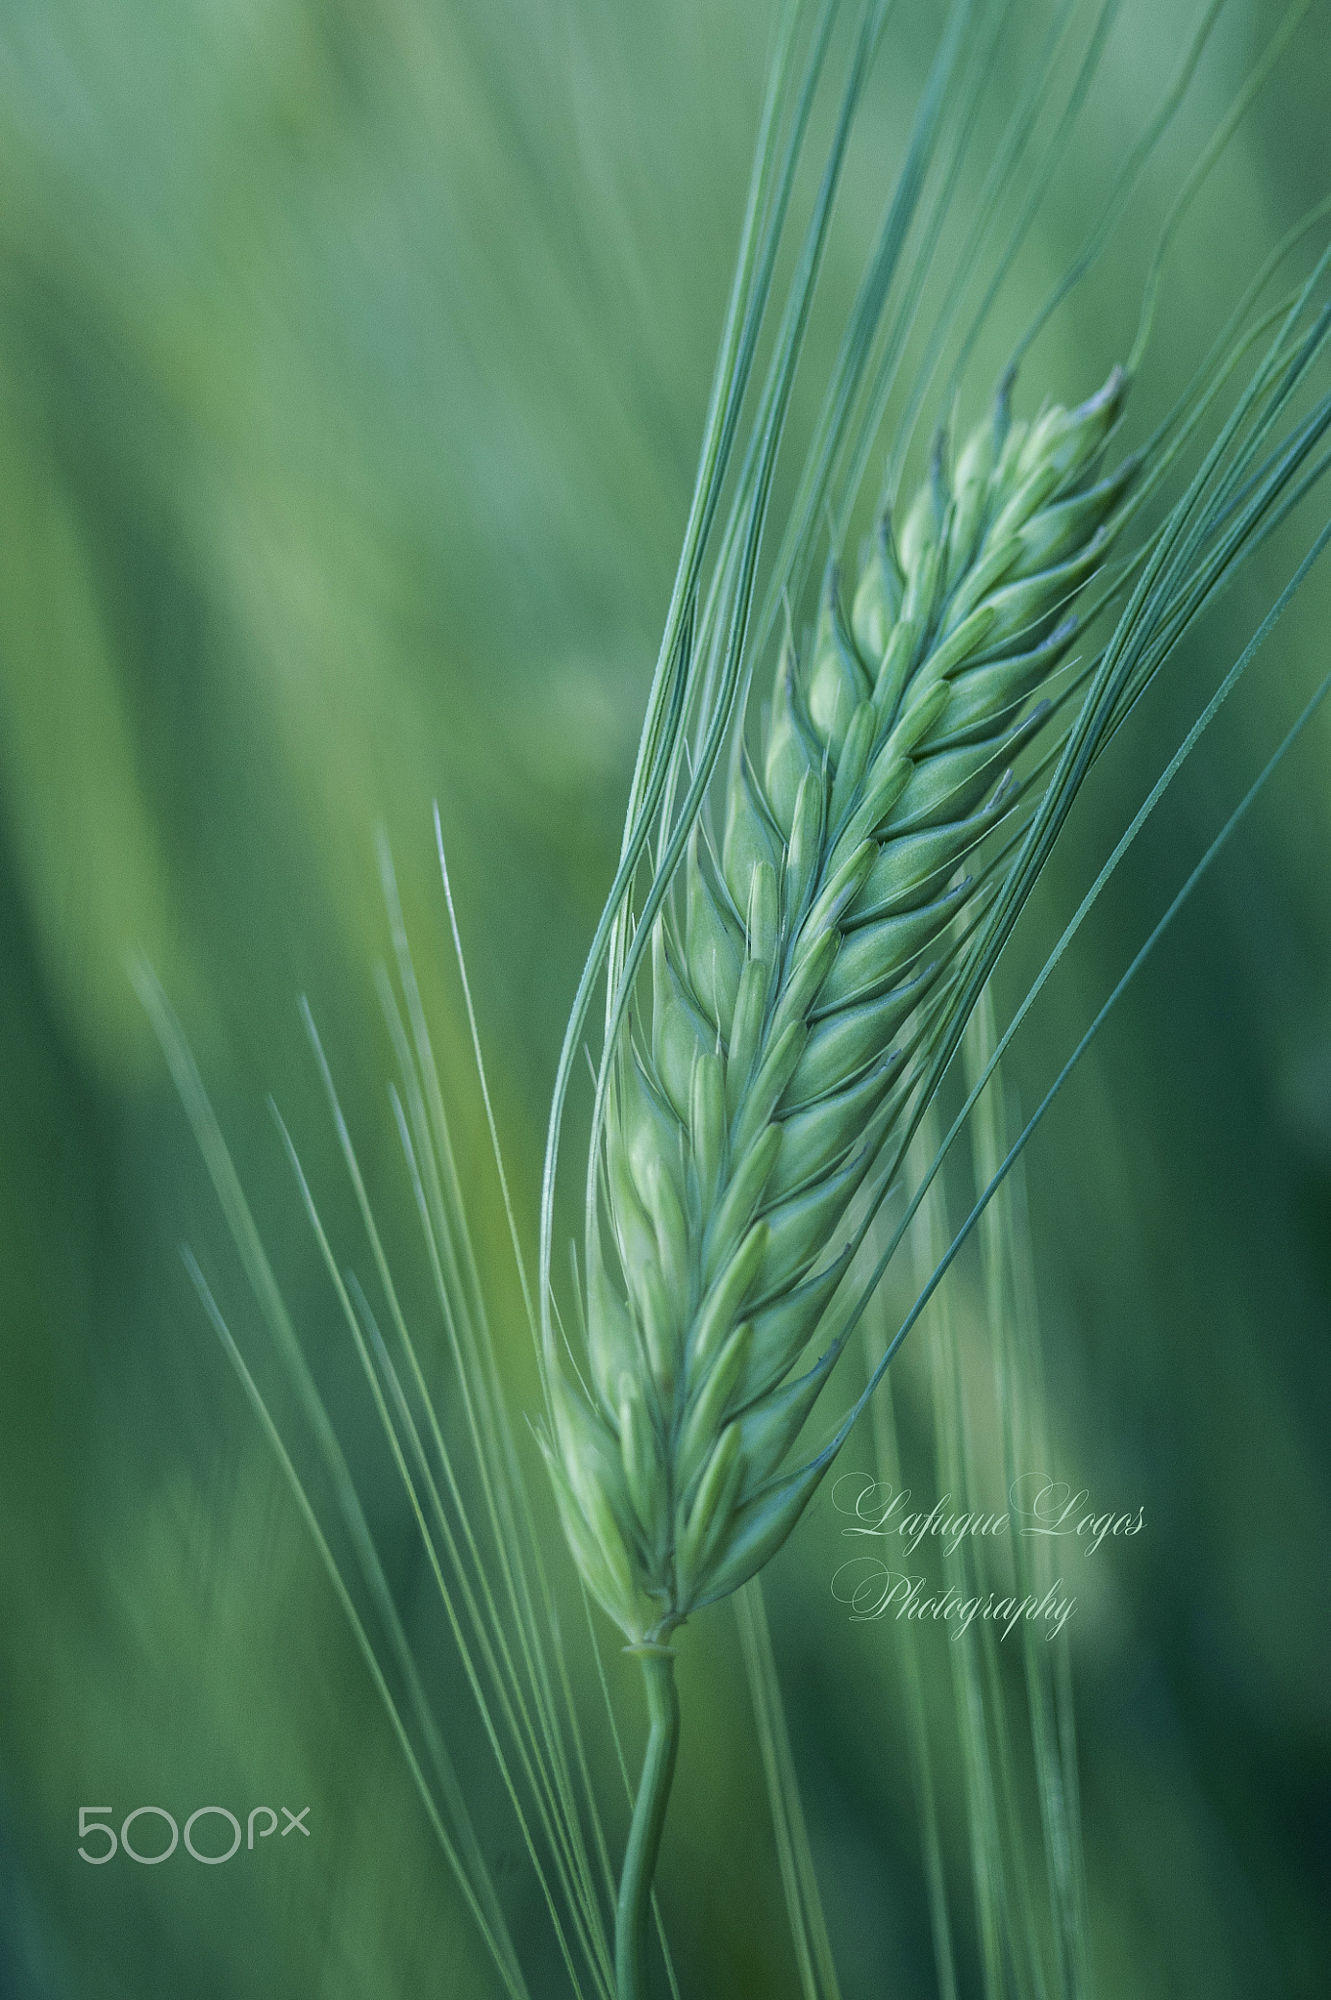 Seasonal greetings from Wheat field